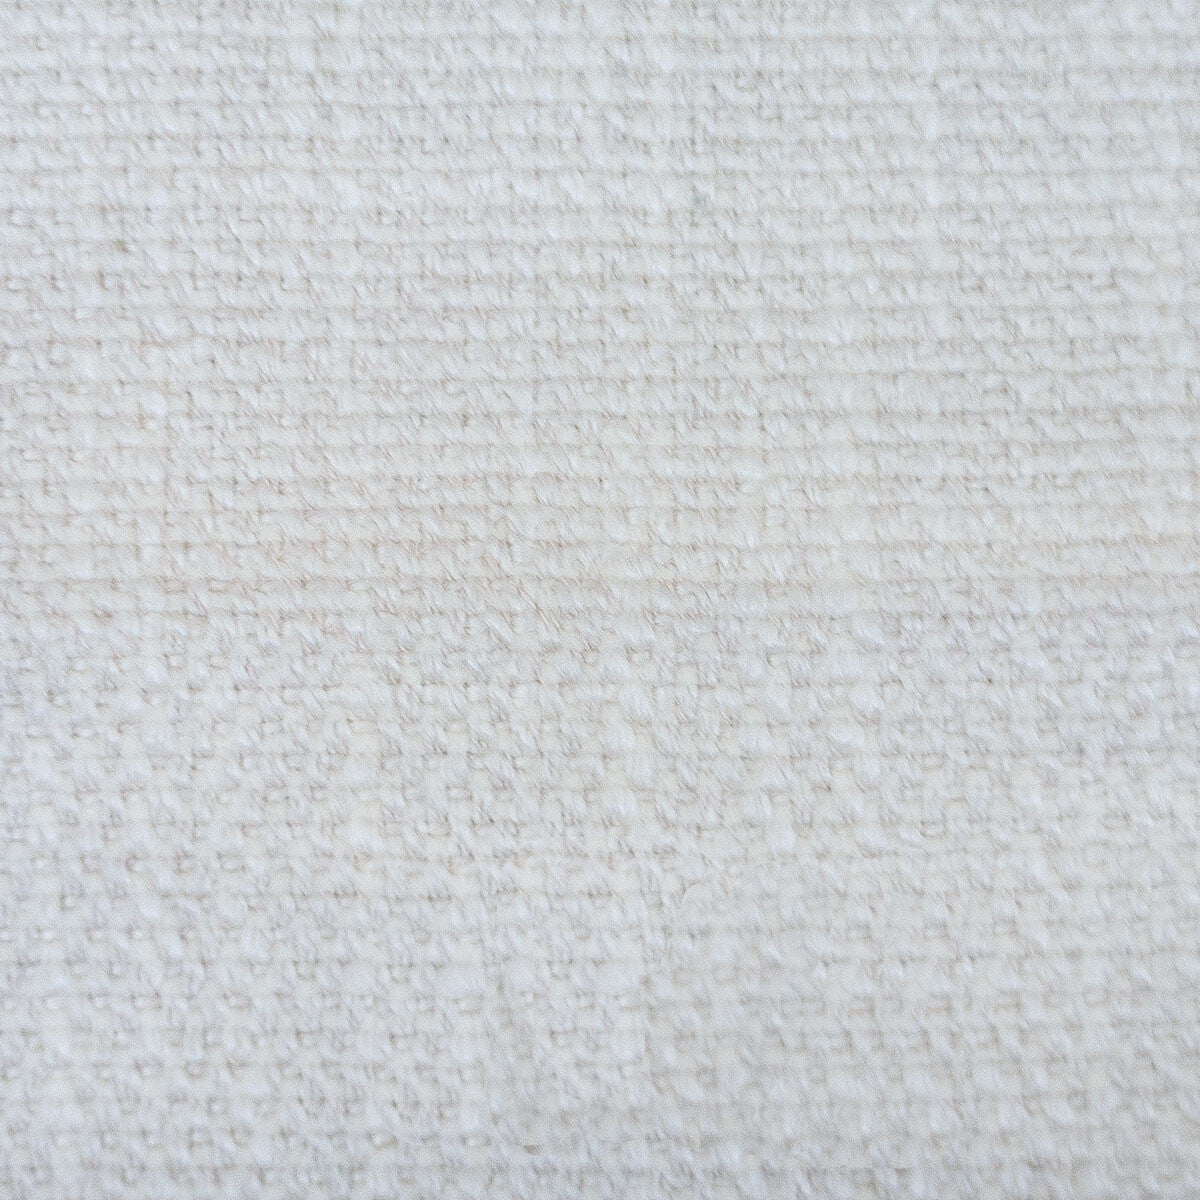 Hugo fabric in blanco color - pattern LCT1053.001.0 - by Gaston y Daniela in the Lorenzo Castillo VI collection